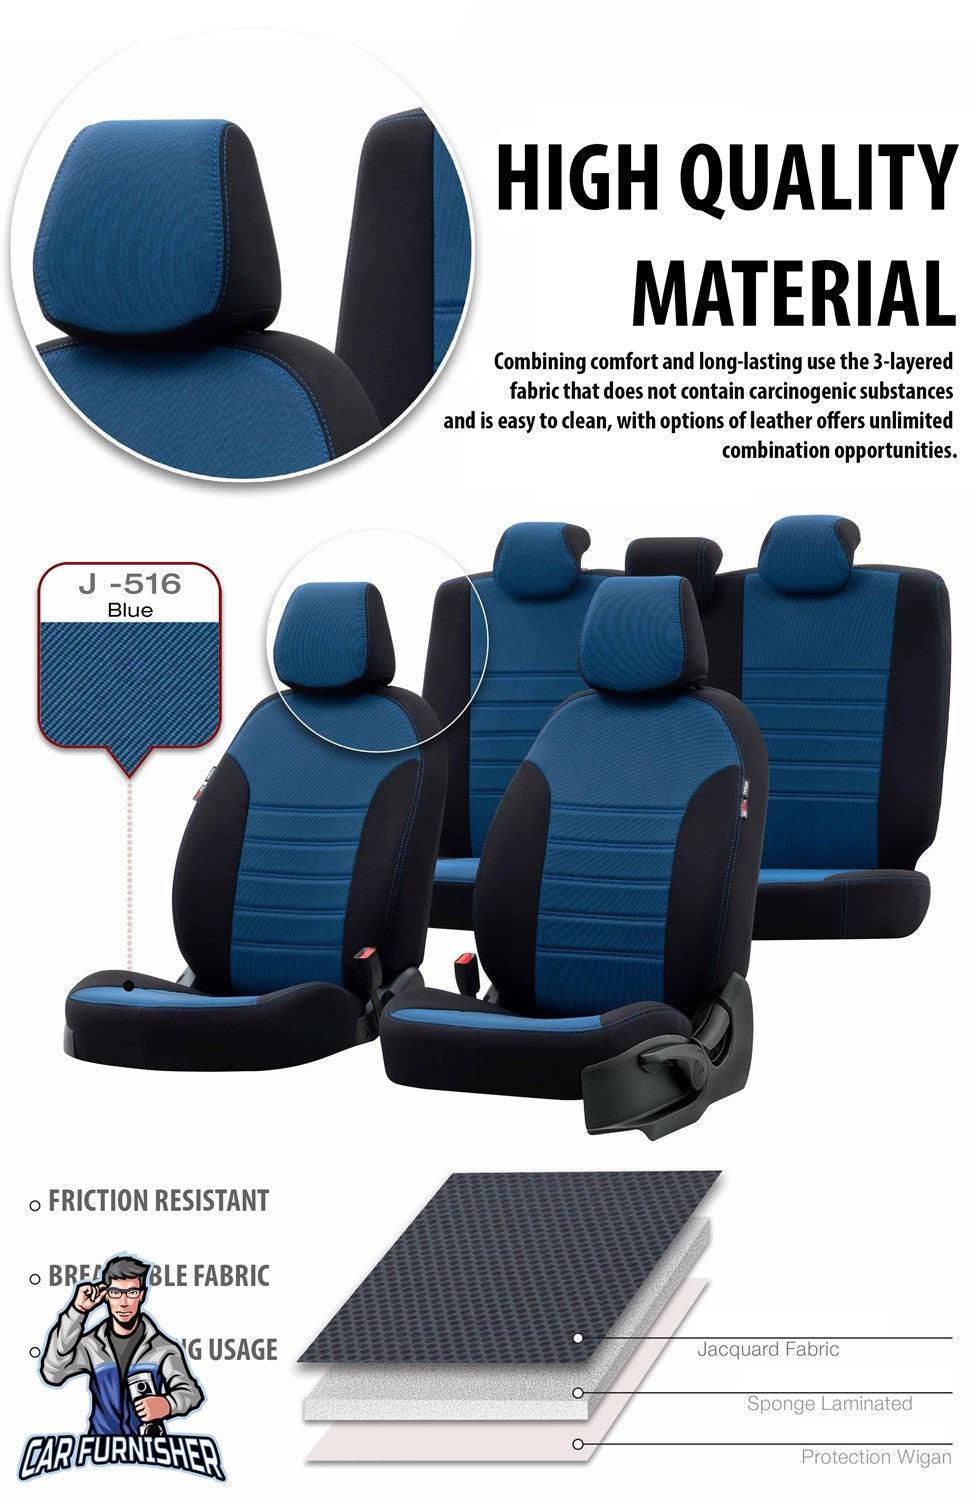 Iveco Daily Seat Covers Original Jacquard Design Dark Beige Jacquard Fabric